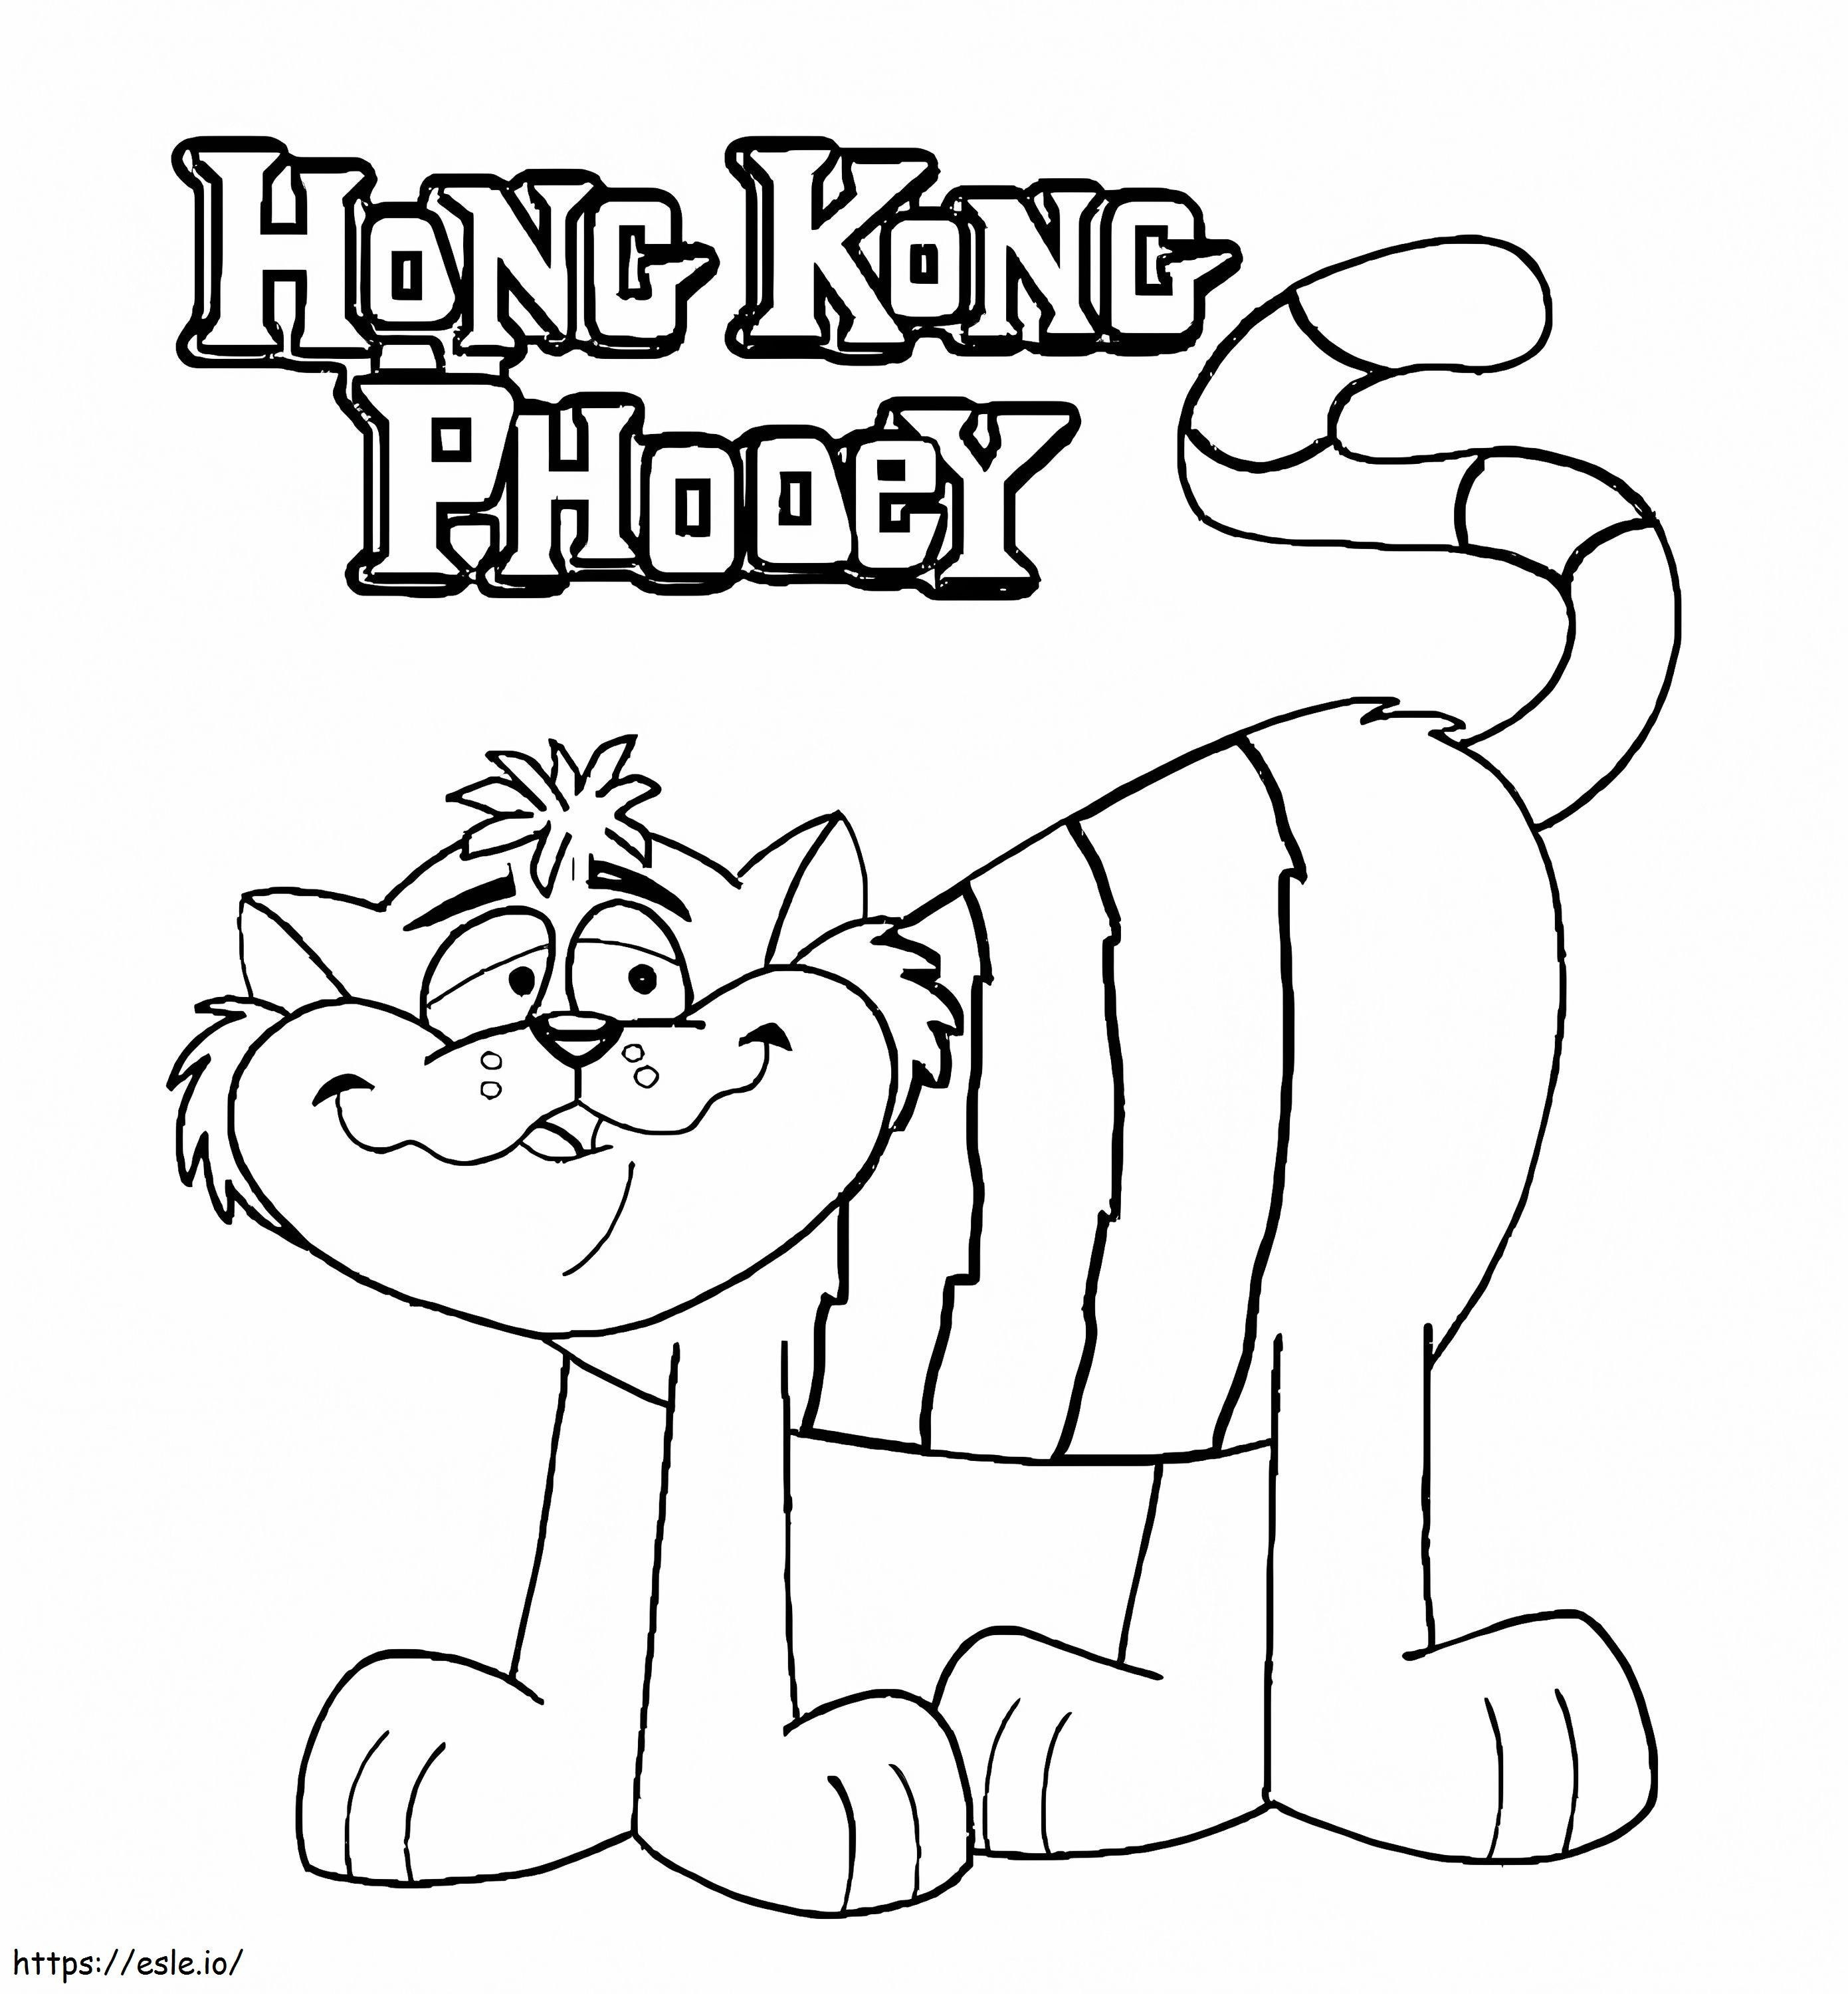 Spot Hong Kong Phooey kifestő